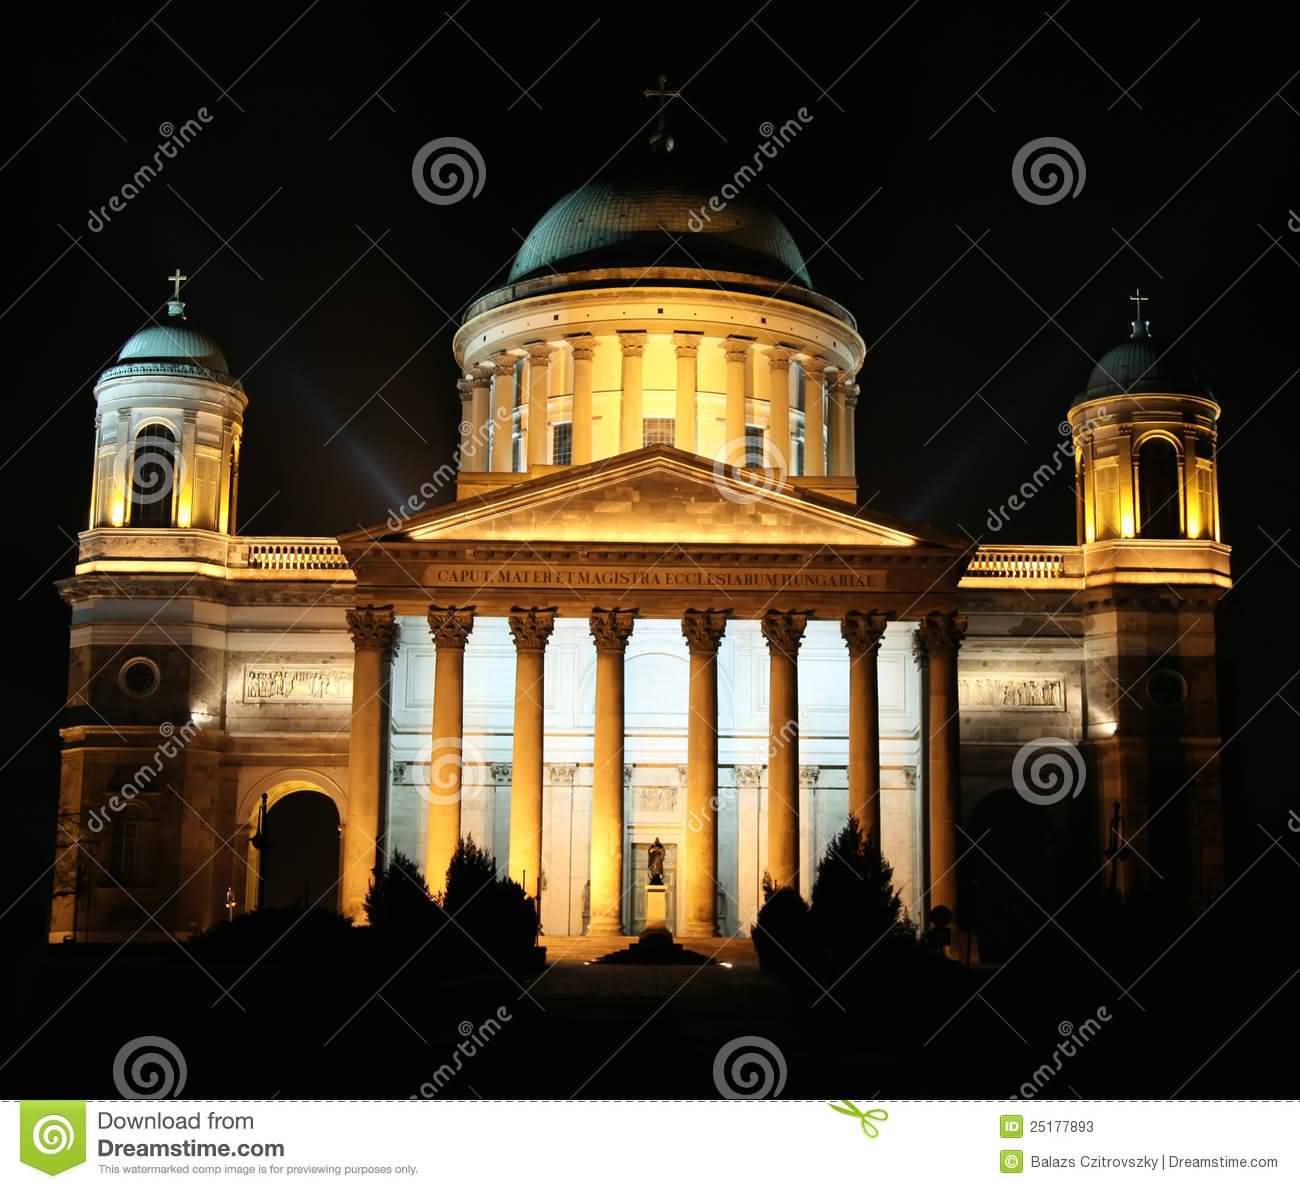 Esztergom Basilica At Night